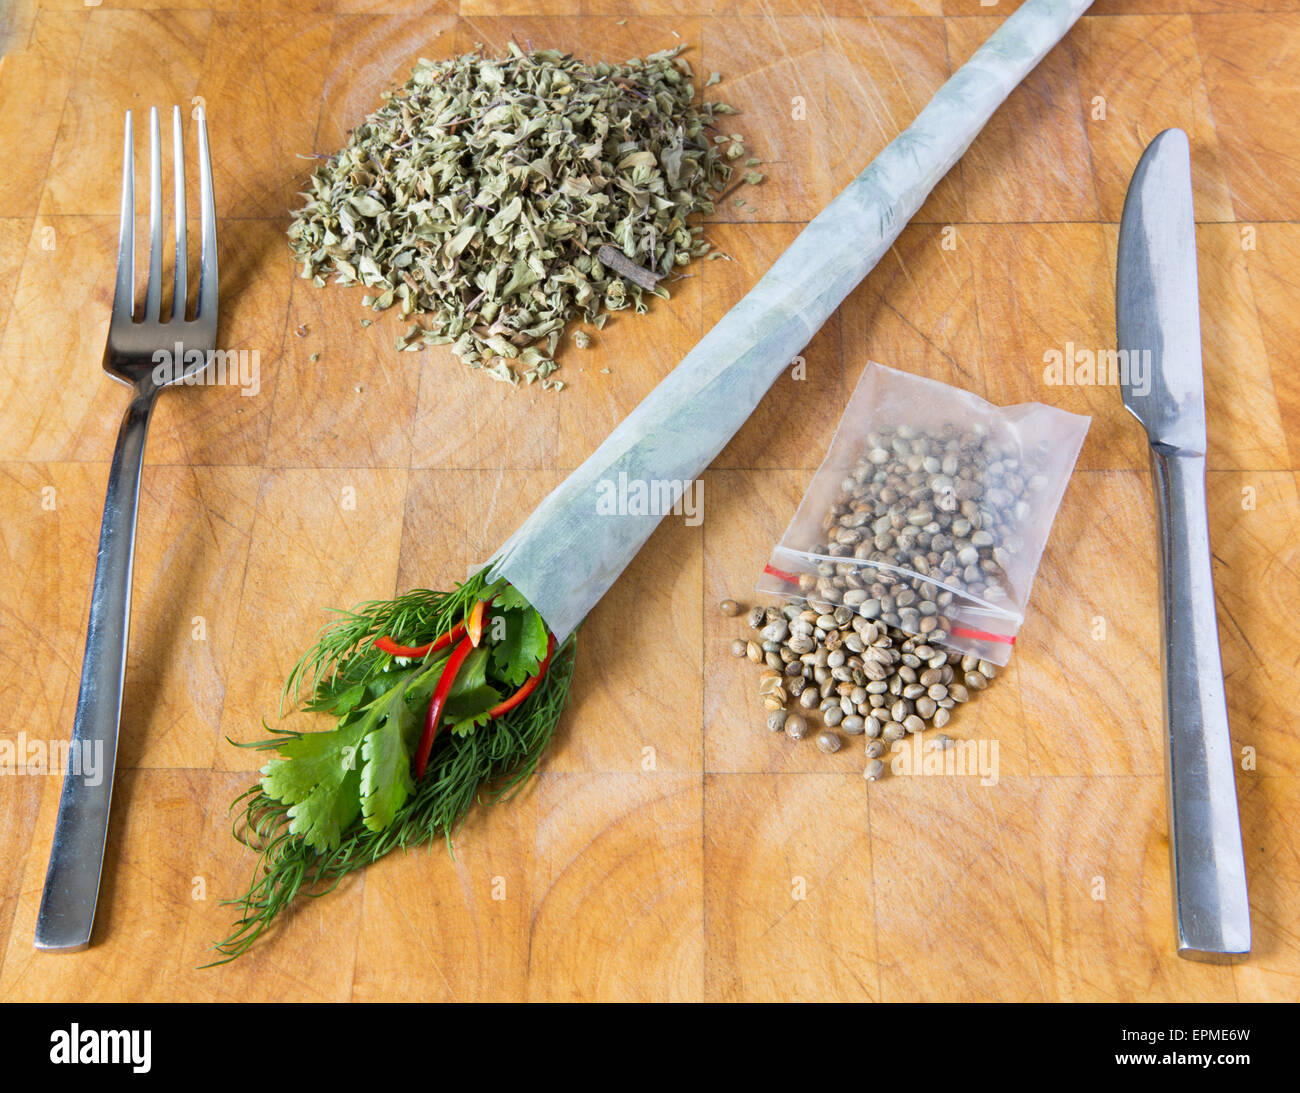 Humorous depiction of a hemp inspired meal featuring hemp seeds, oregano, dill, coriander, rizlas. Stock Photo